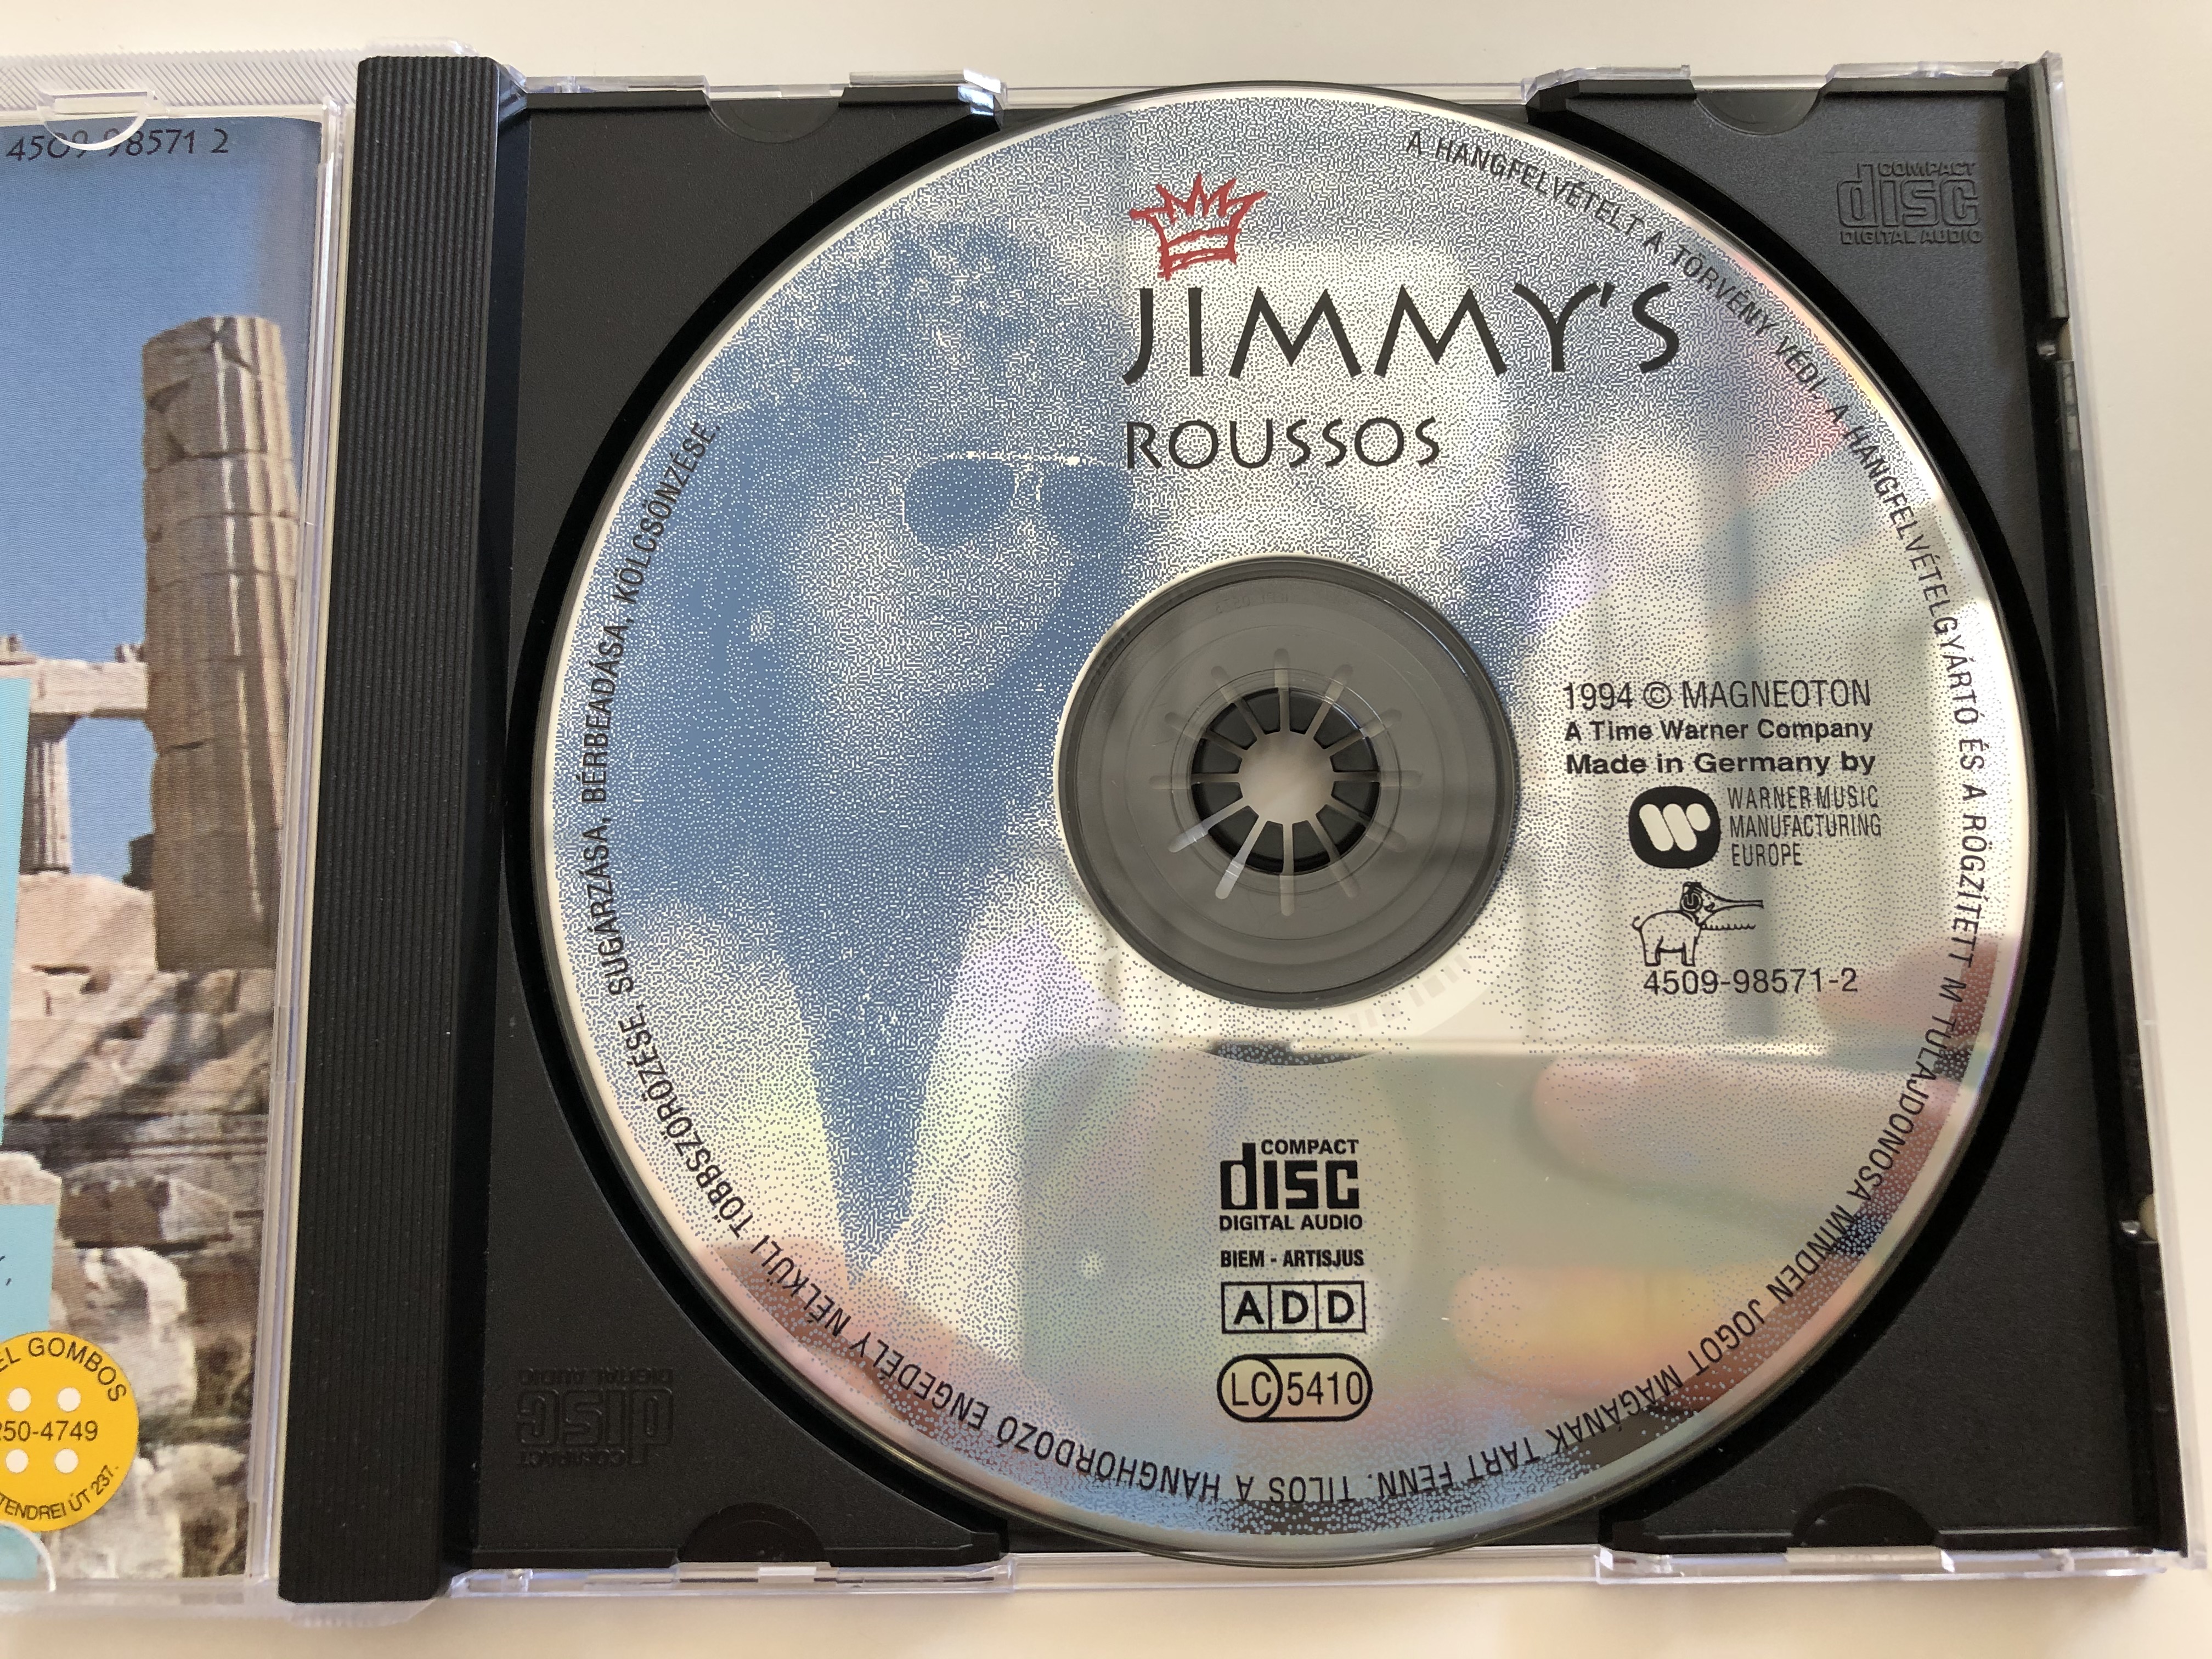 jimmy-s-roussos-magneoton-audio-cd-1994-4509-98571-2-3-.jpg